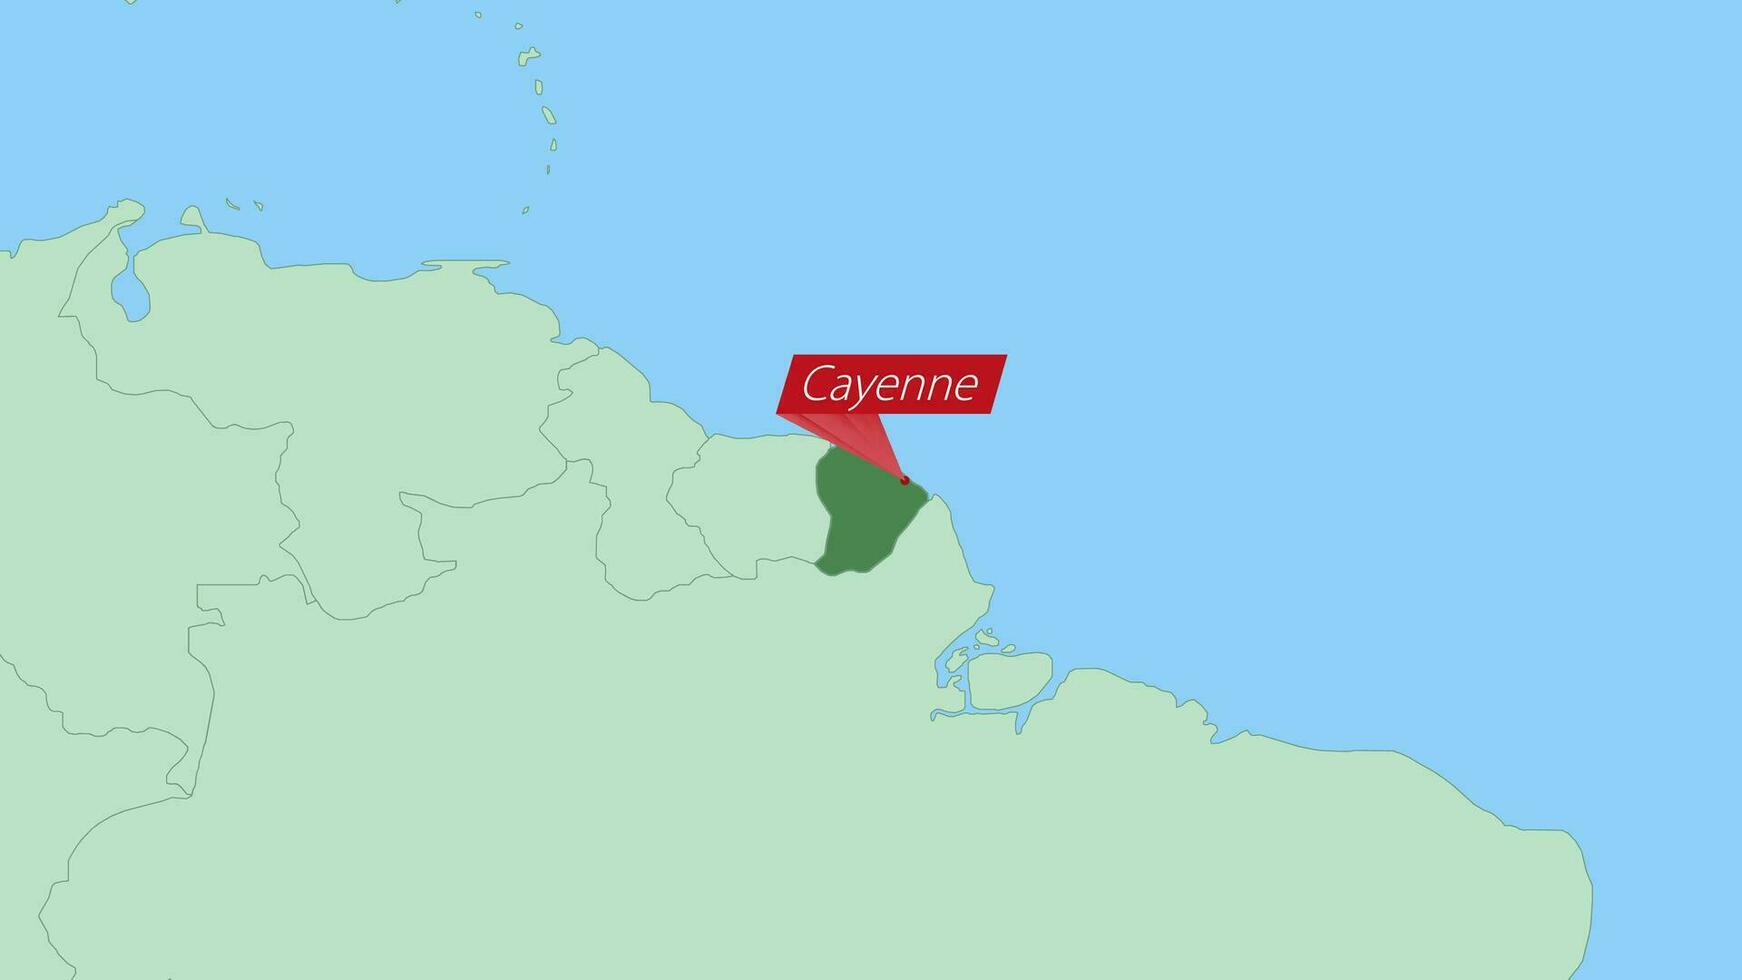 mapa de francés Guayana con alfiler de país capital. vector